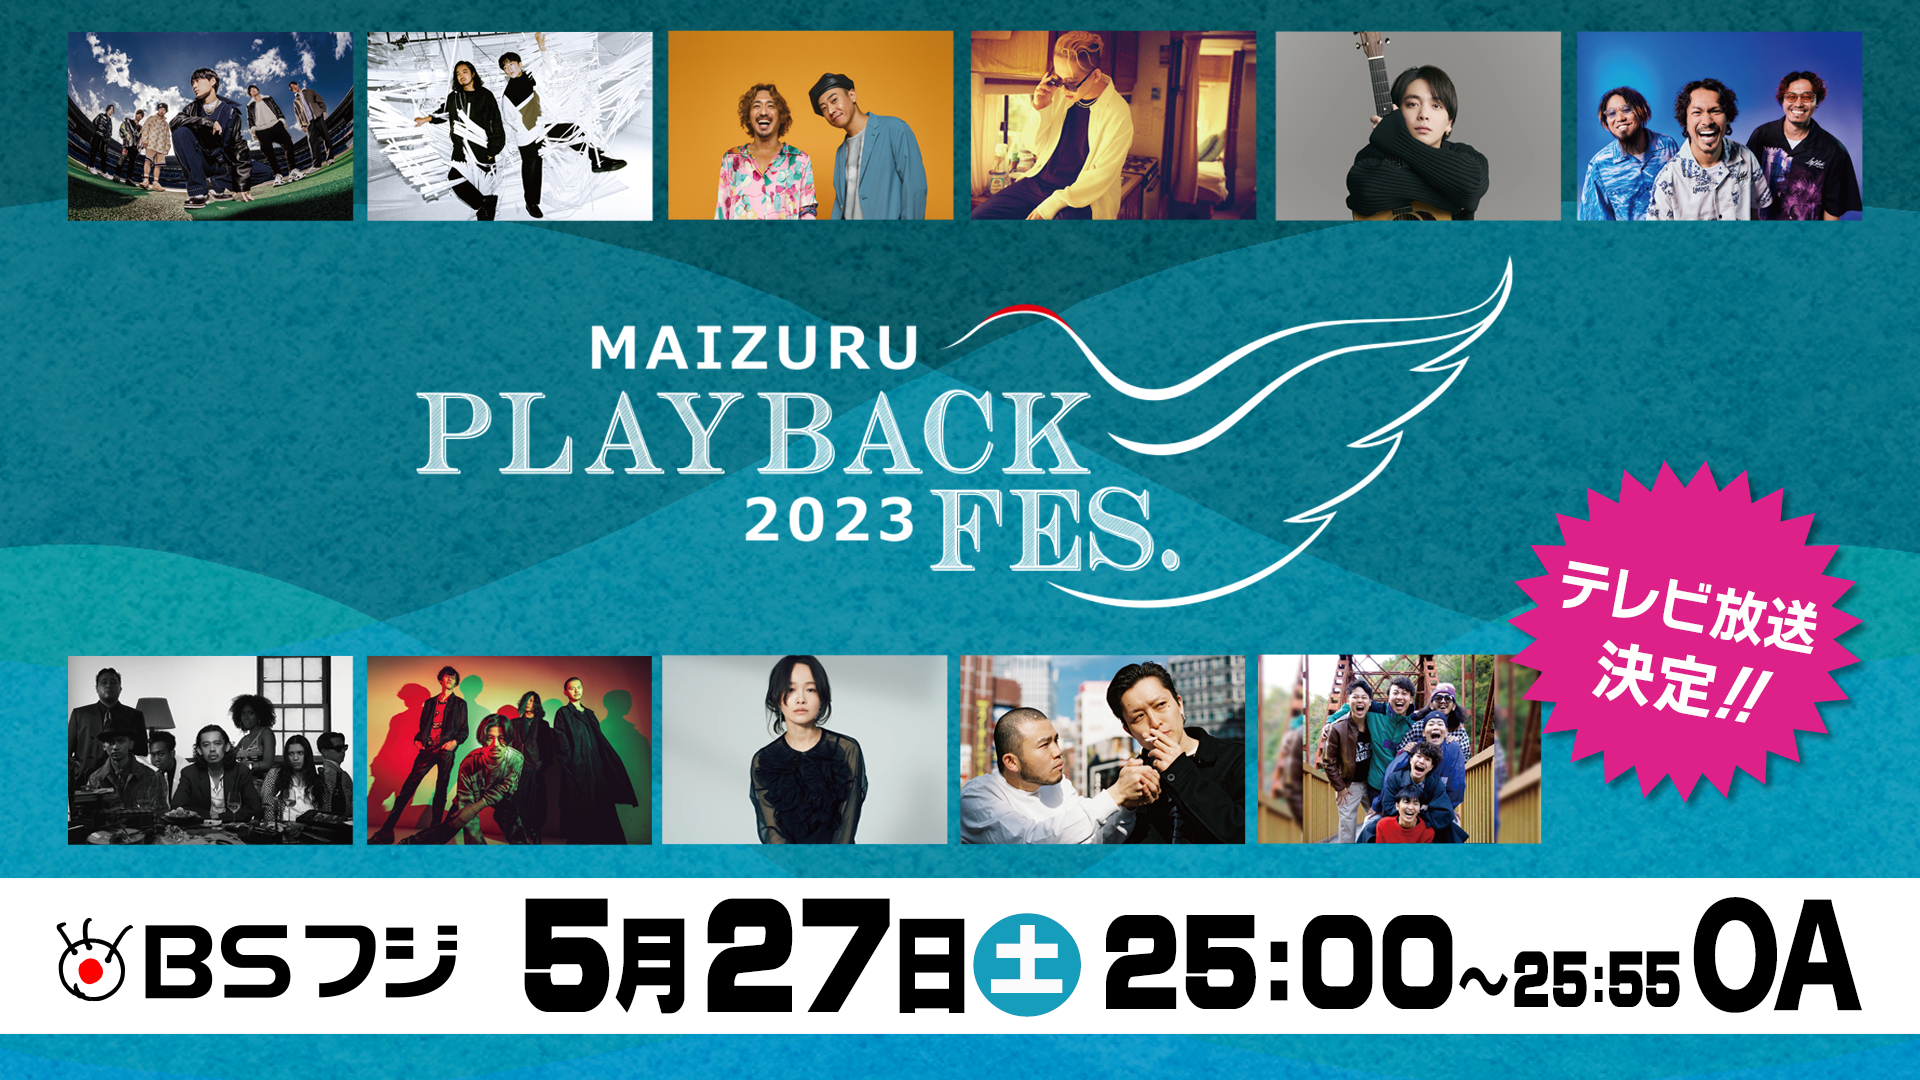 MAIZURU PLAYBACK FES.2023 BSフジにてON AIR